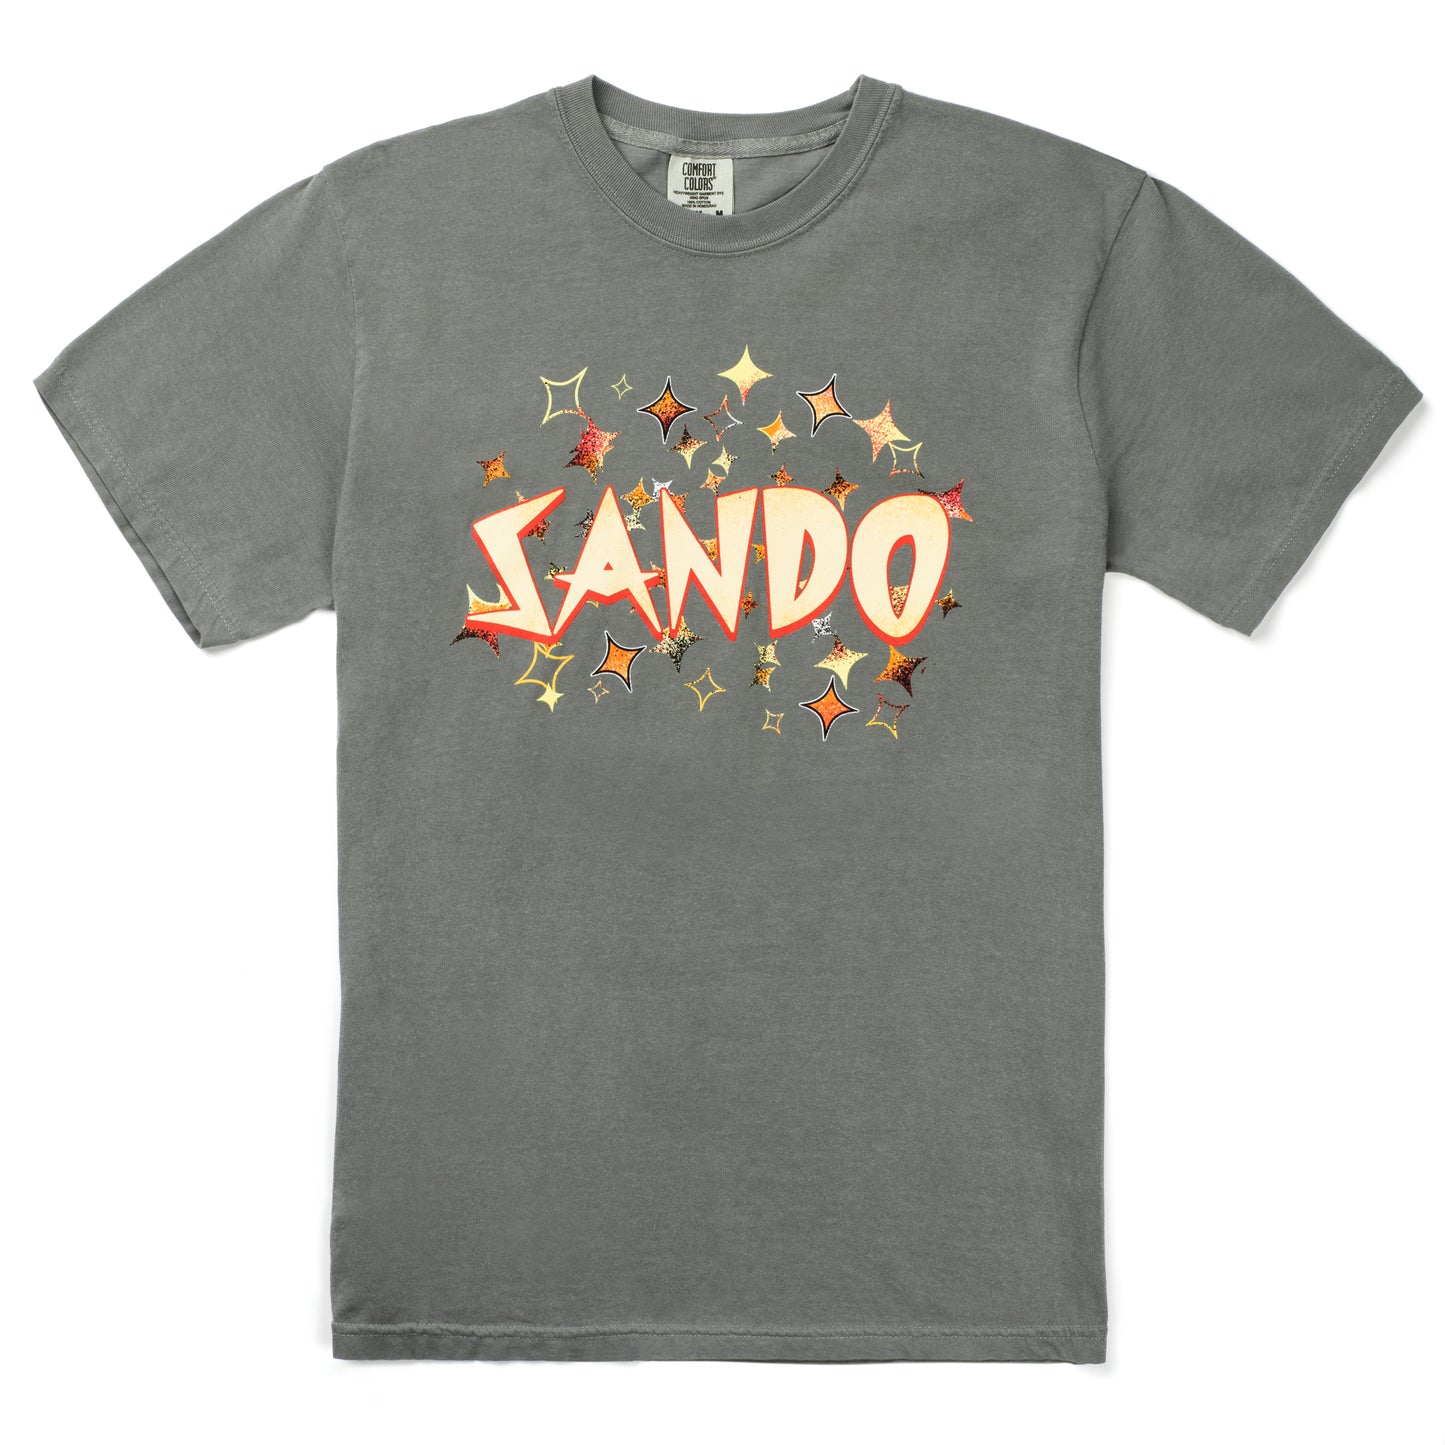 Sando T-Shirt